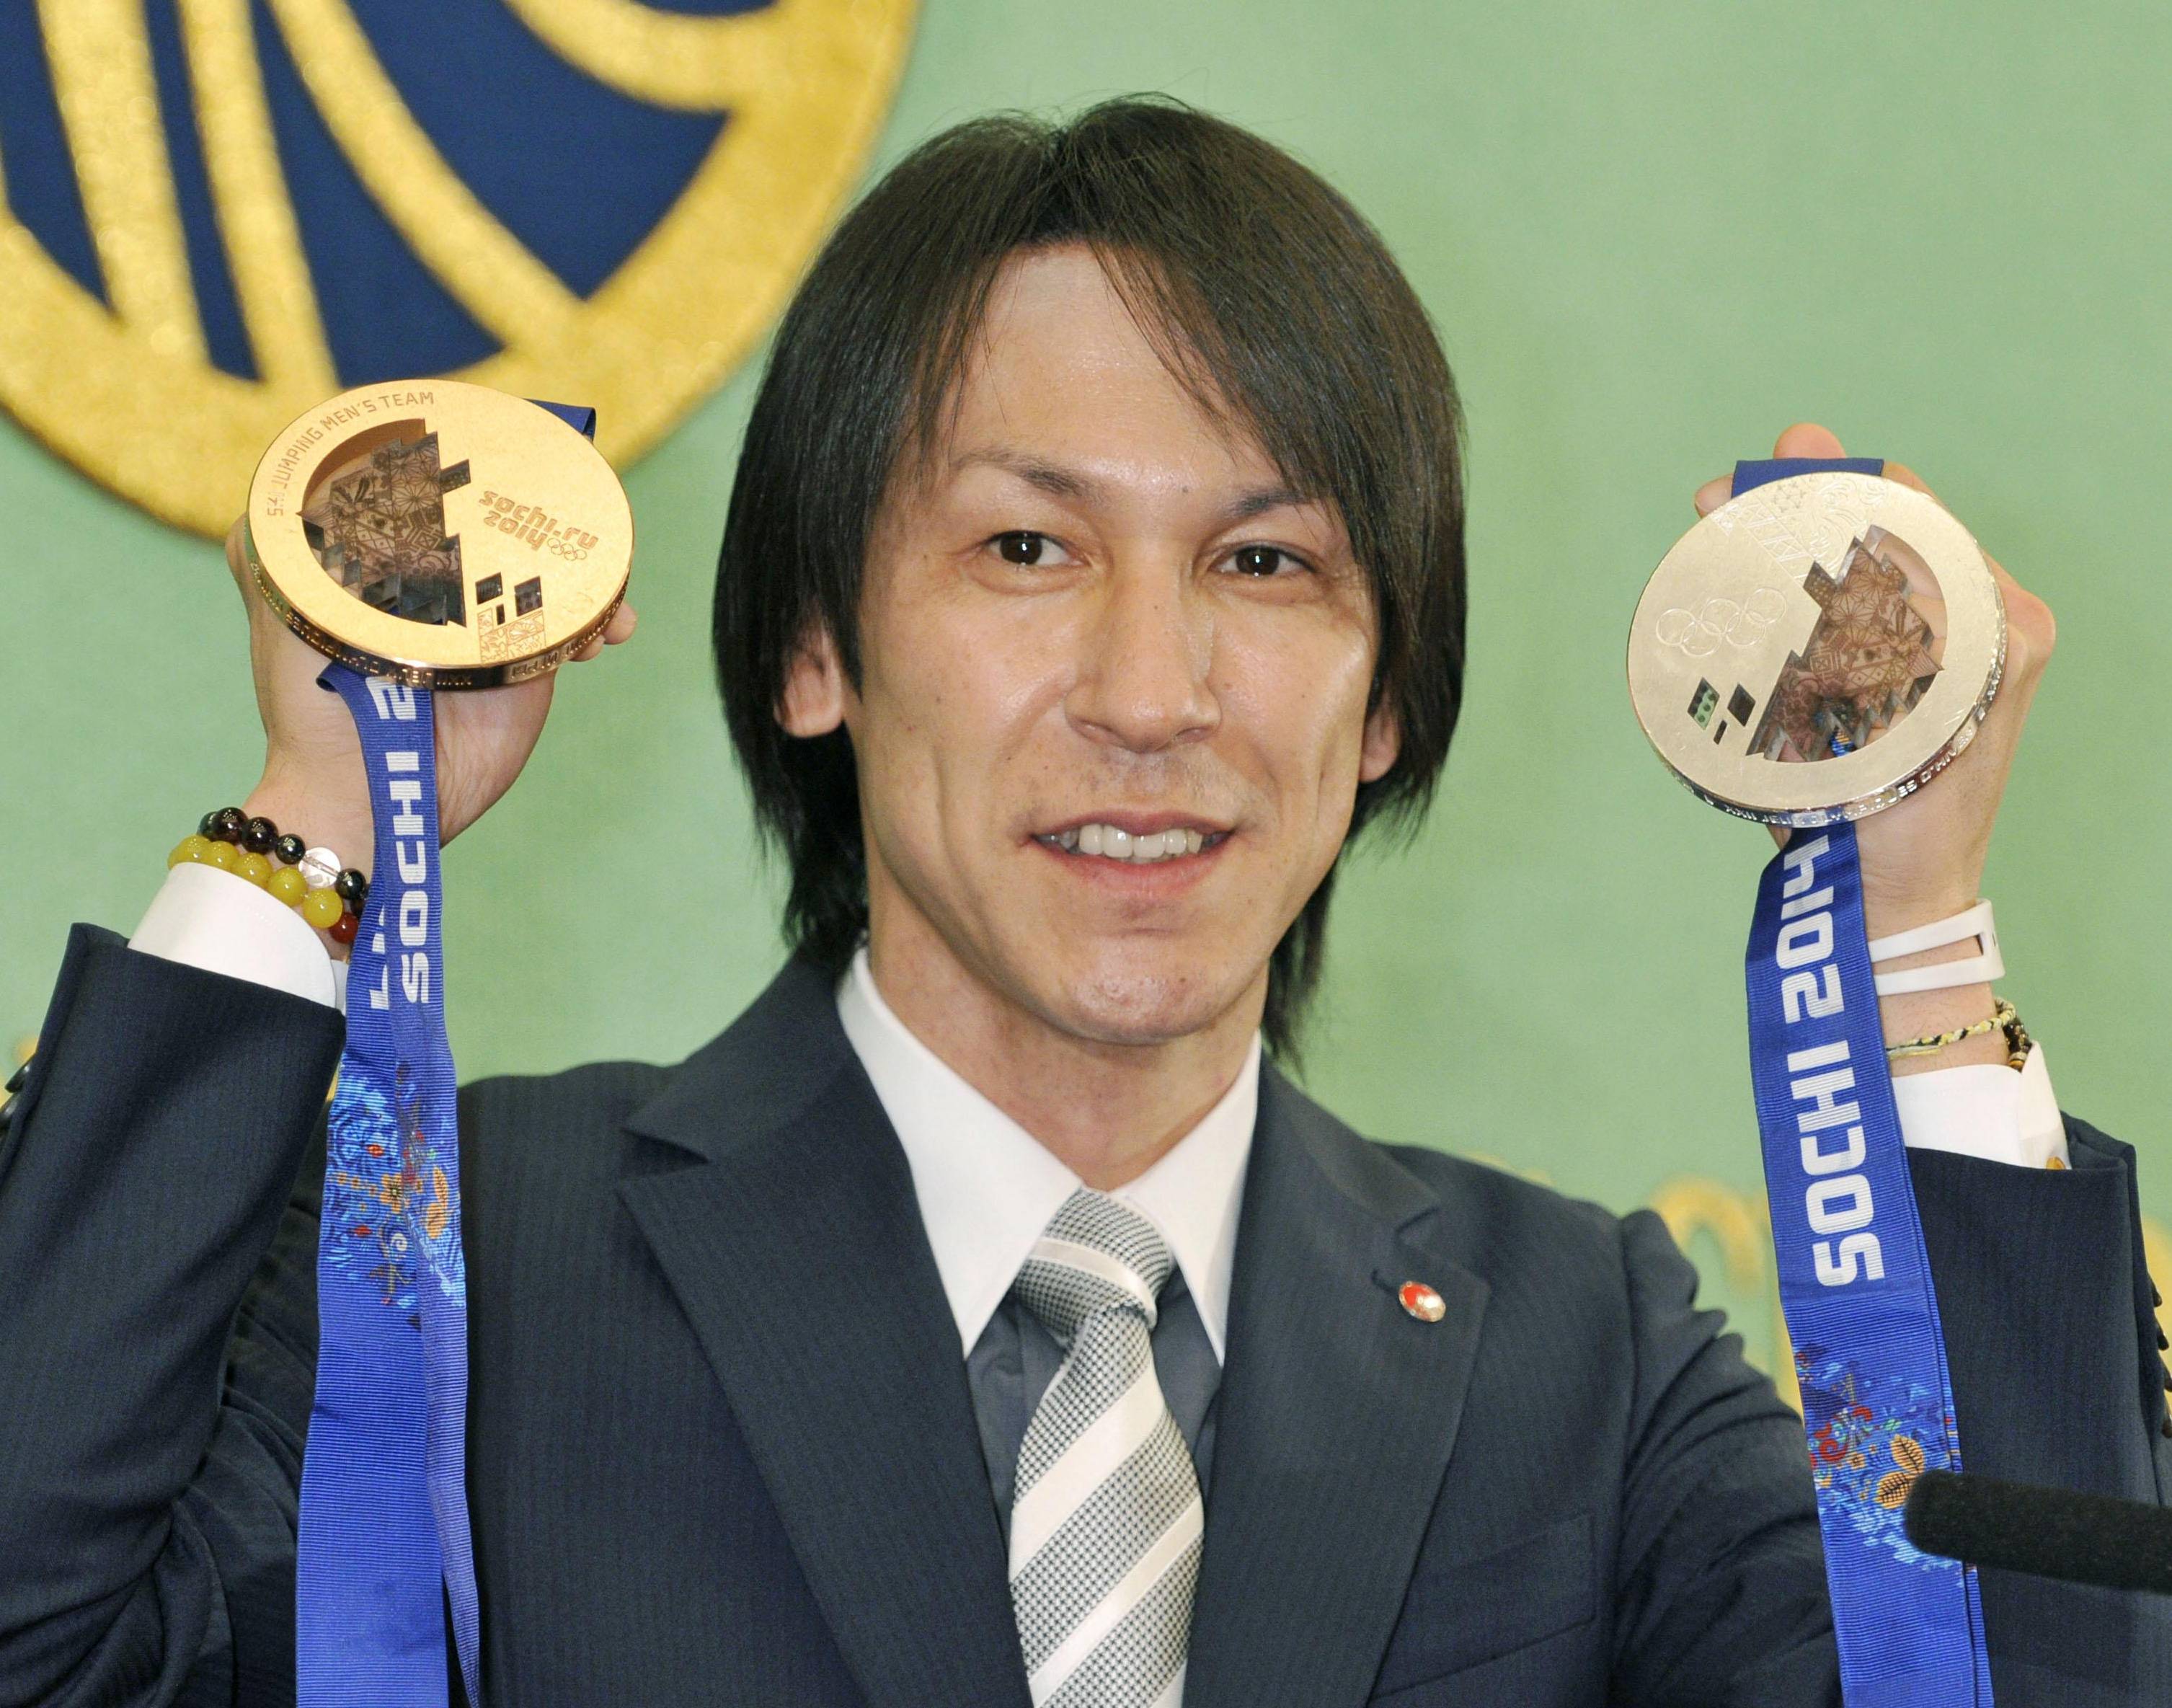 Ski Jumper Kasai Hopes To Compete Until Hes 50 The Japan Times throughout ski jumping kasai regarding Residence